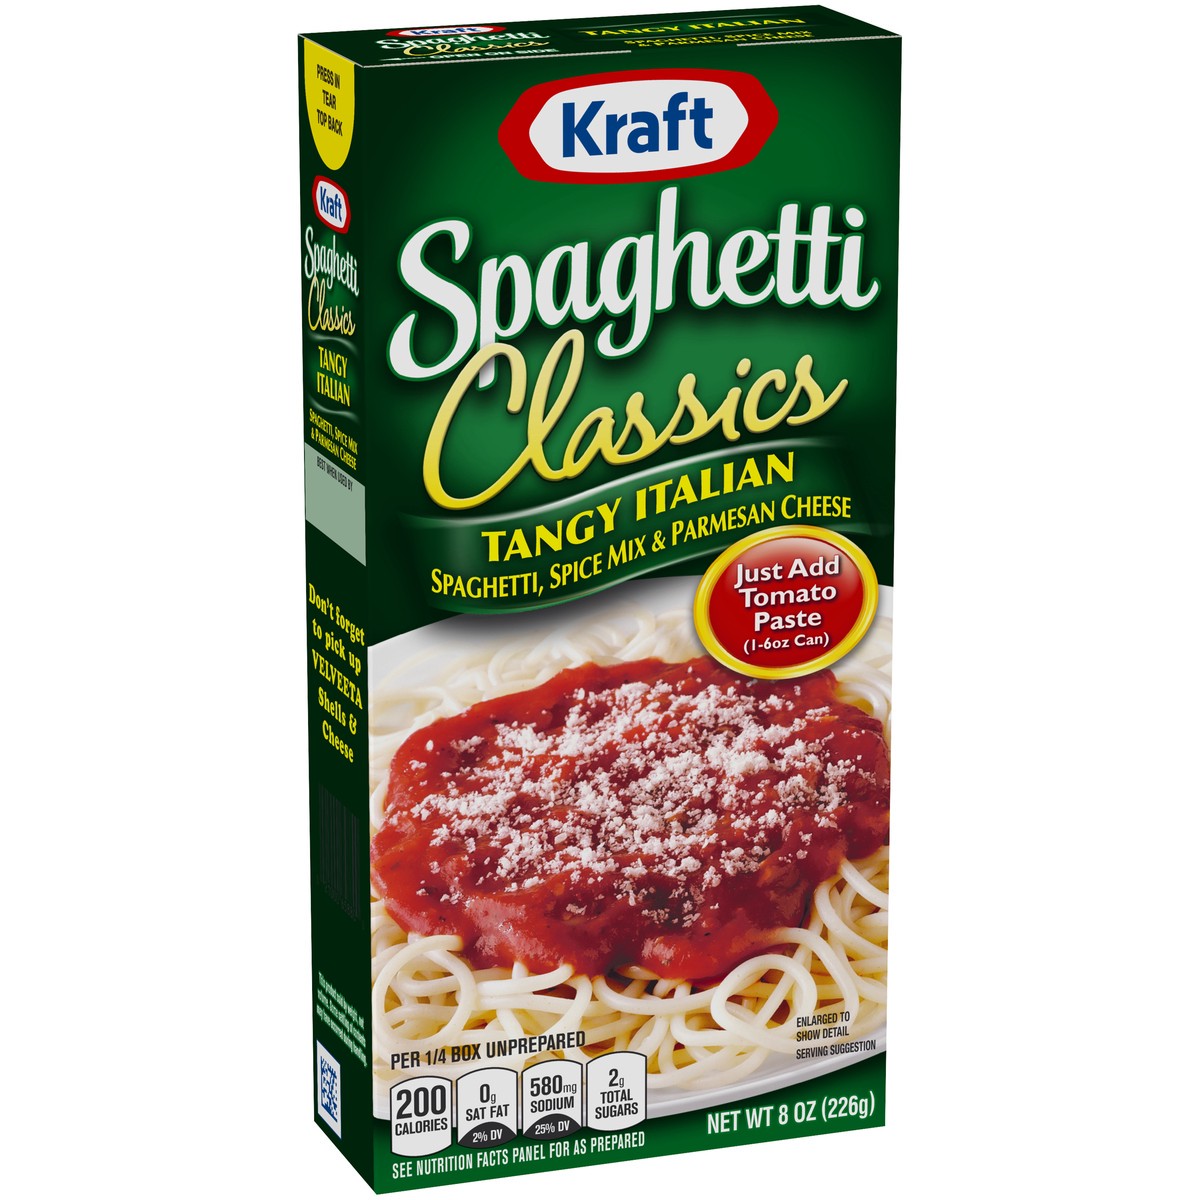 slide 9 of 14, Kraft Spaghetti Classics Tangy Italian Spaghetti, Spices, & Parmesean Cheese Meal Mix, 8 oz Box, 8 oz